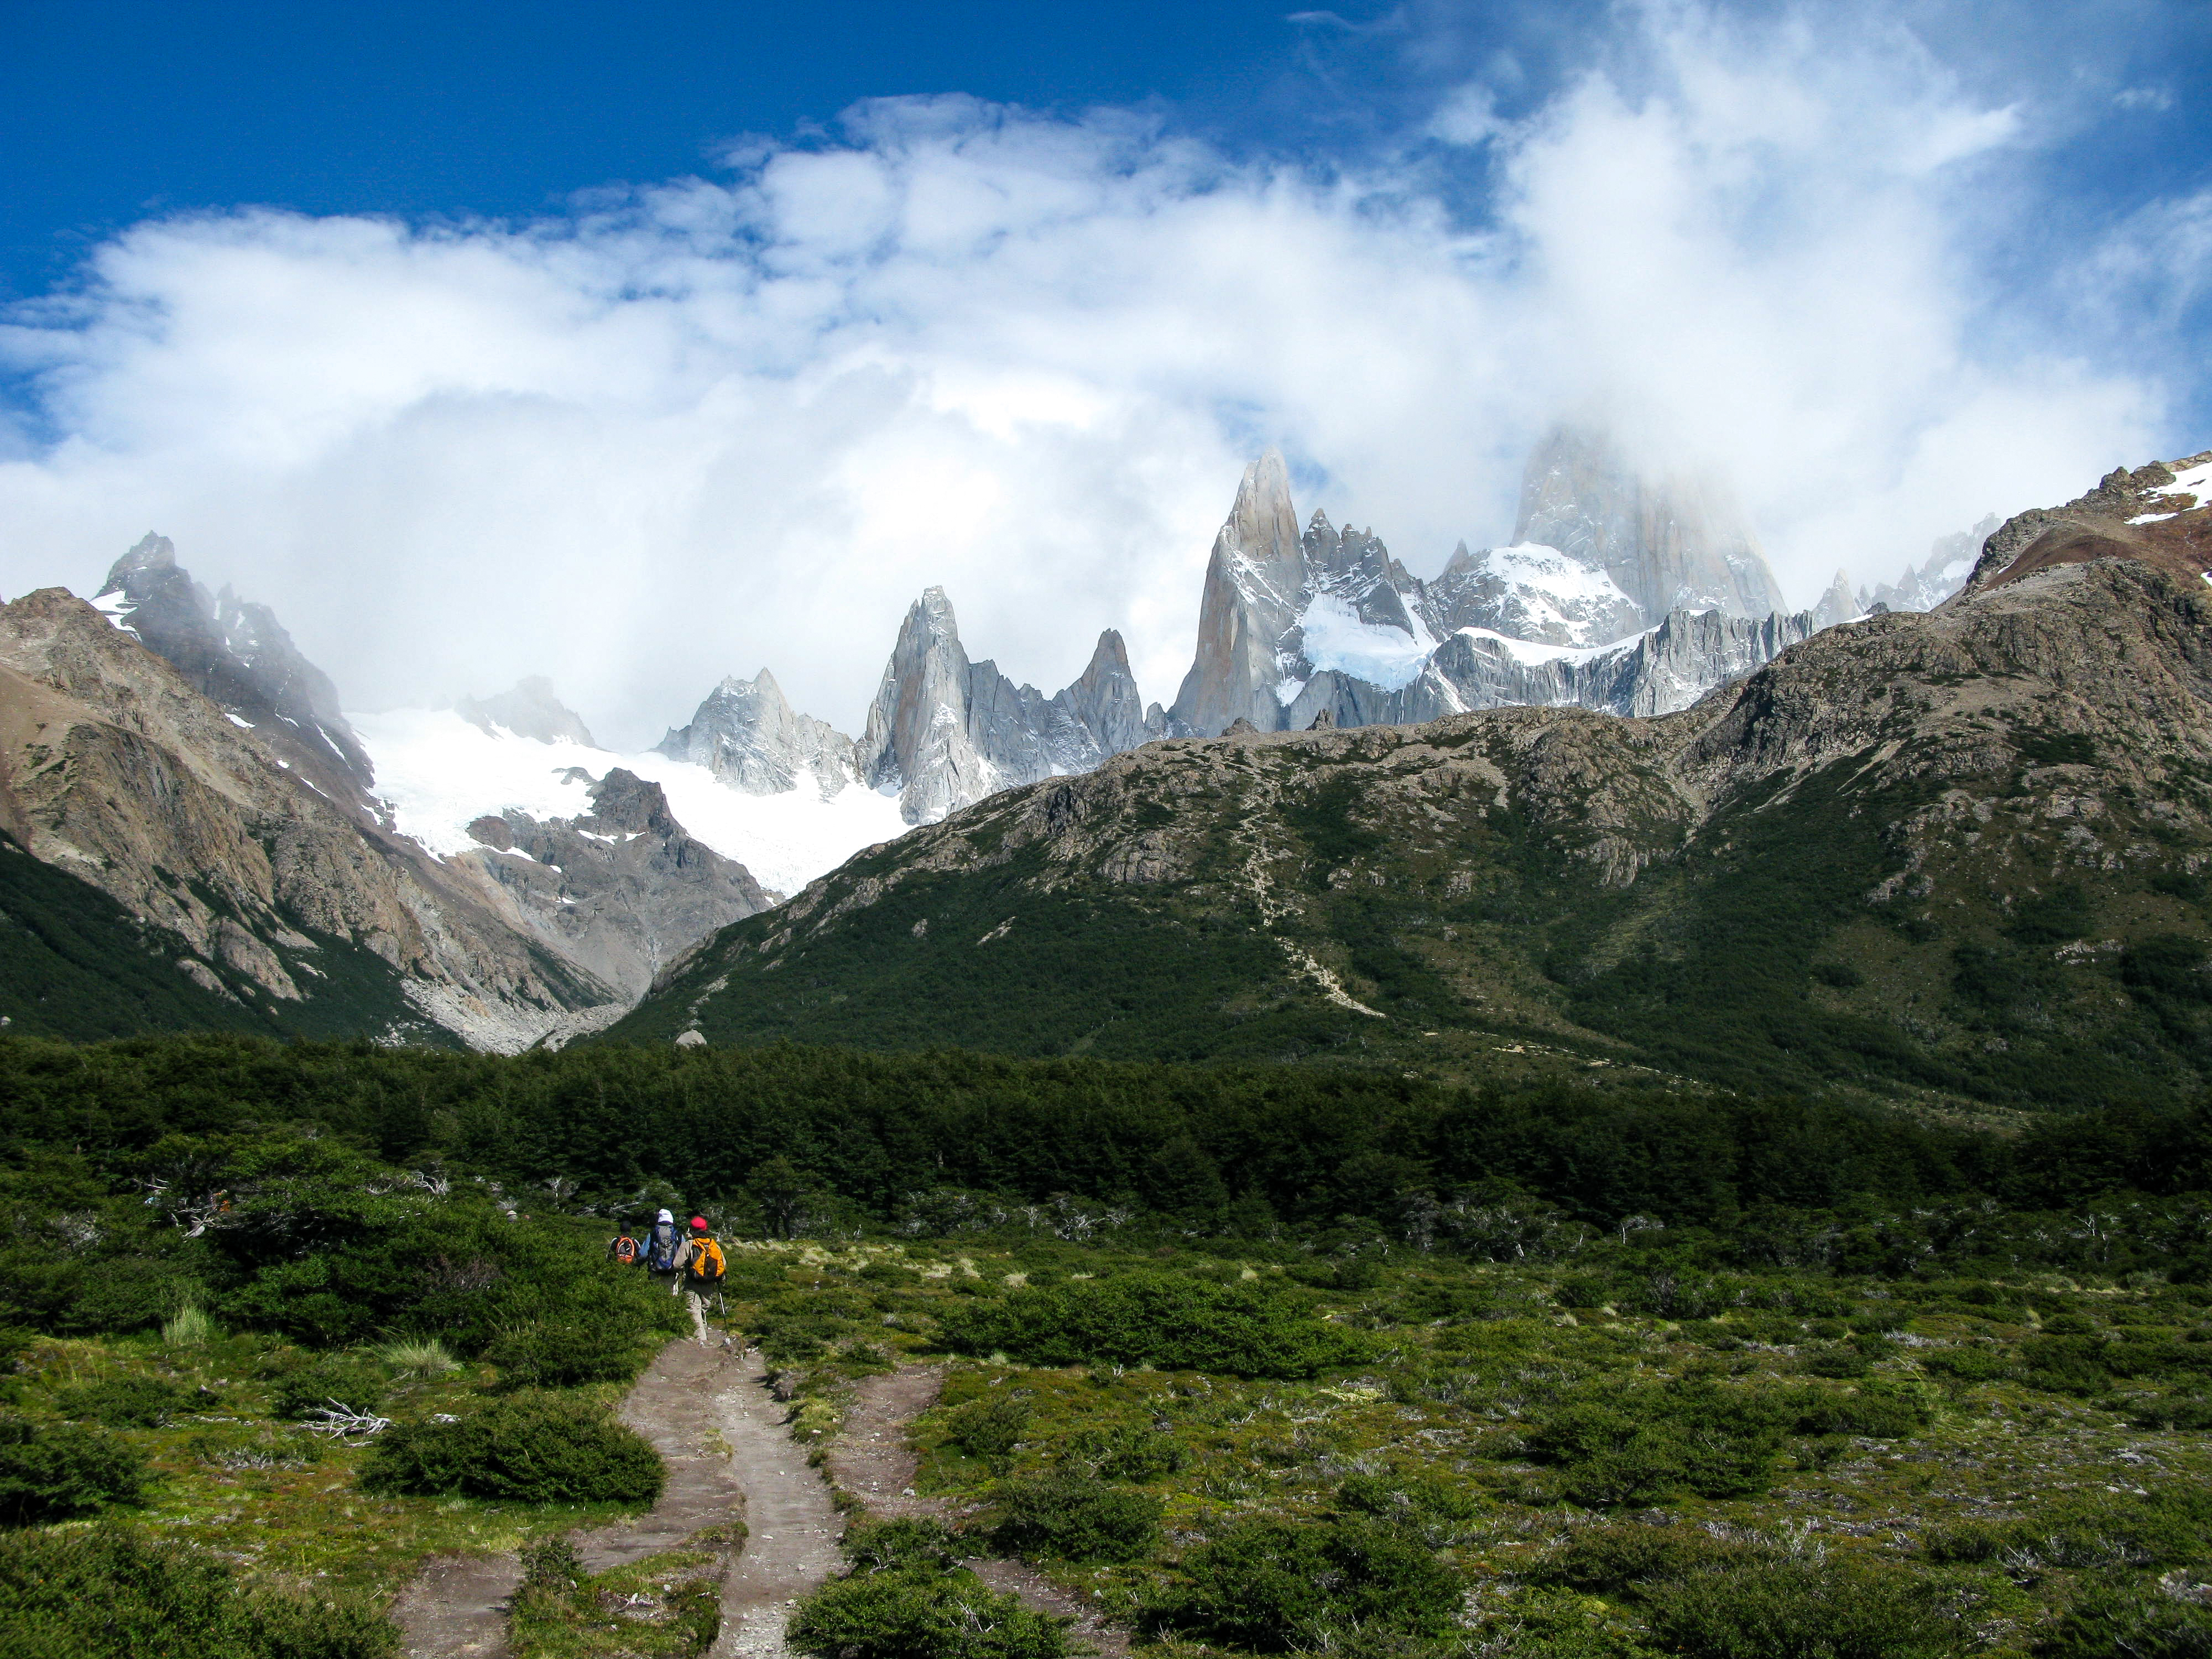 tourhub | Active Adventures | Patagonia Hiking Adventure 